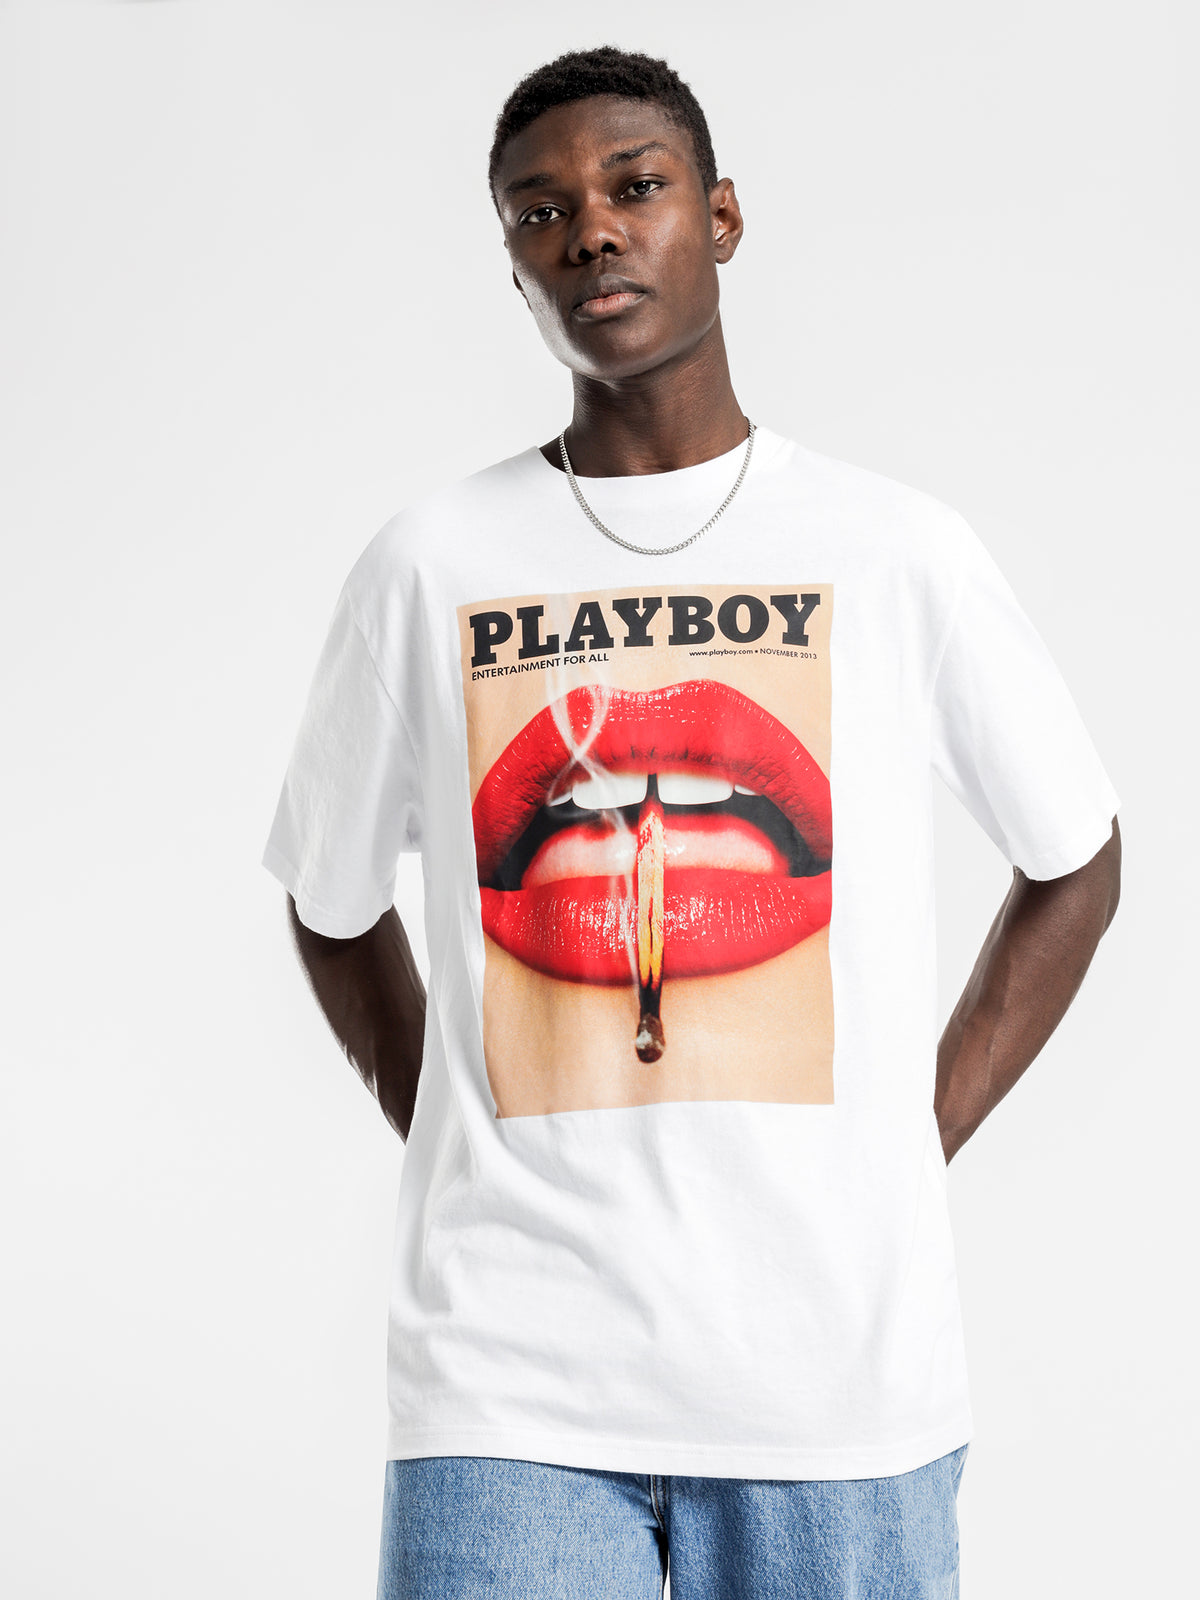 Playboy November 2013 T-Shirt in White